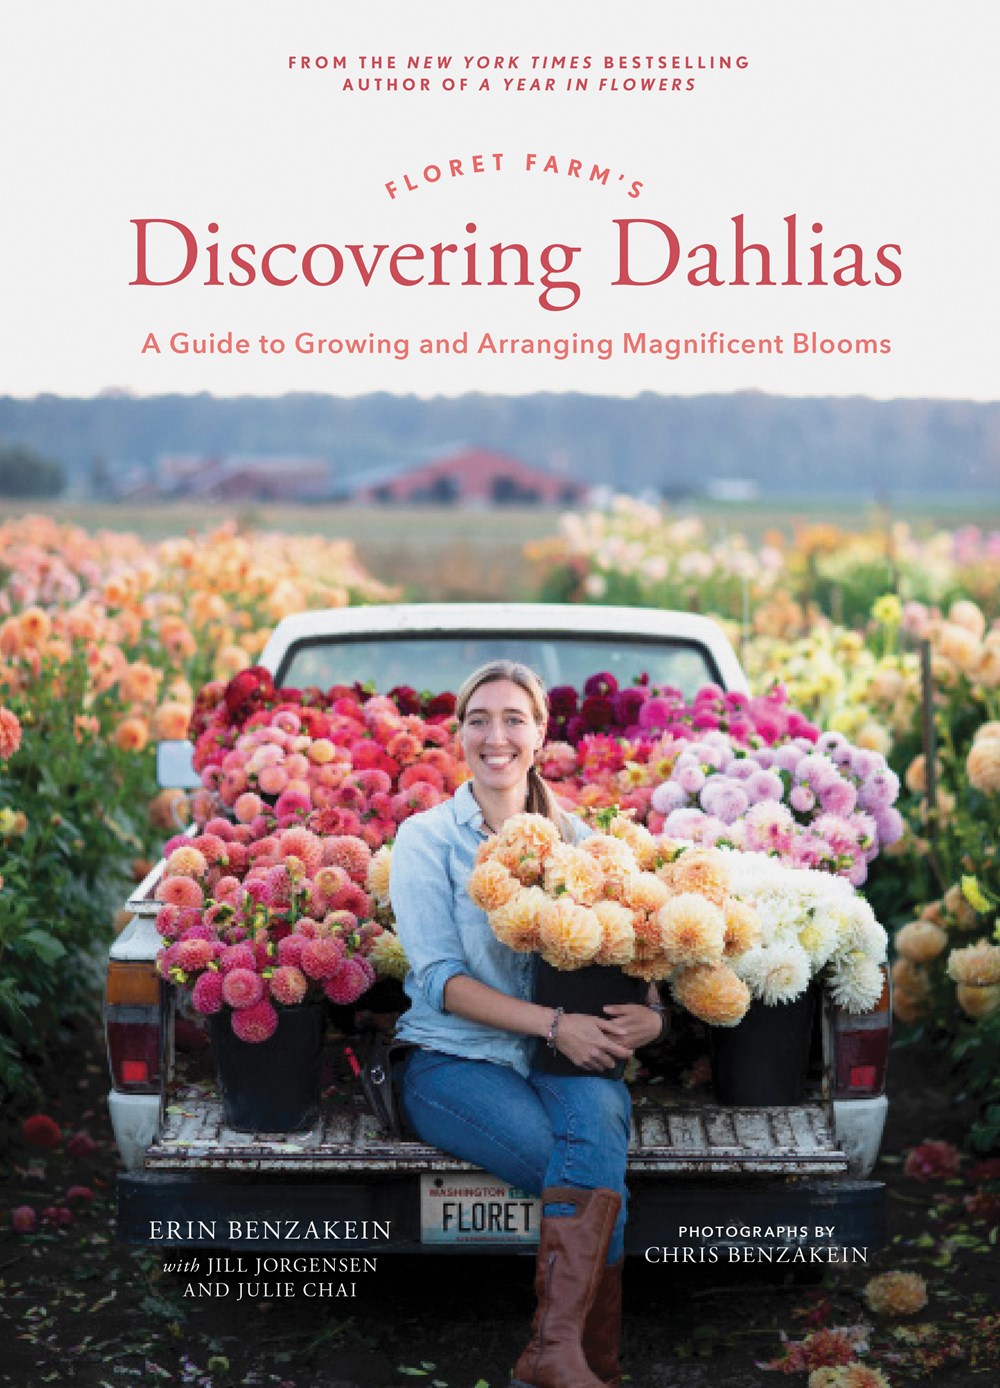 A Conversation with Erin Benzakein, author of ‘Floret Farm’s Discovering Dahlias’